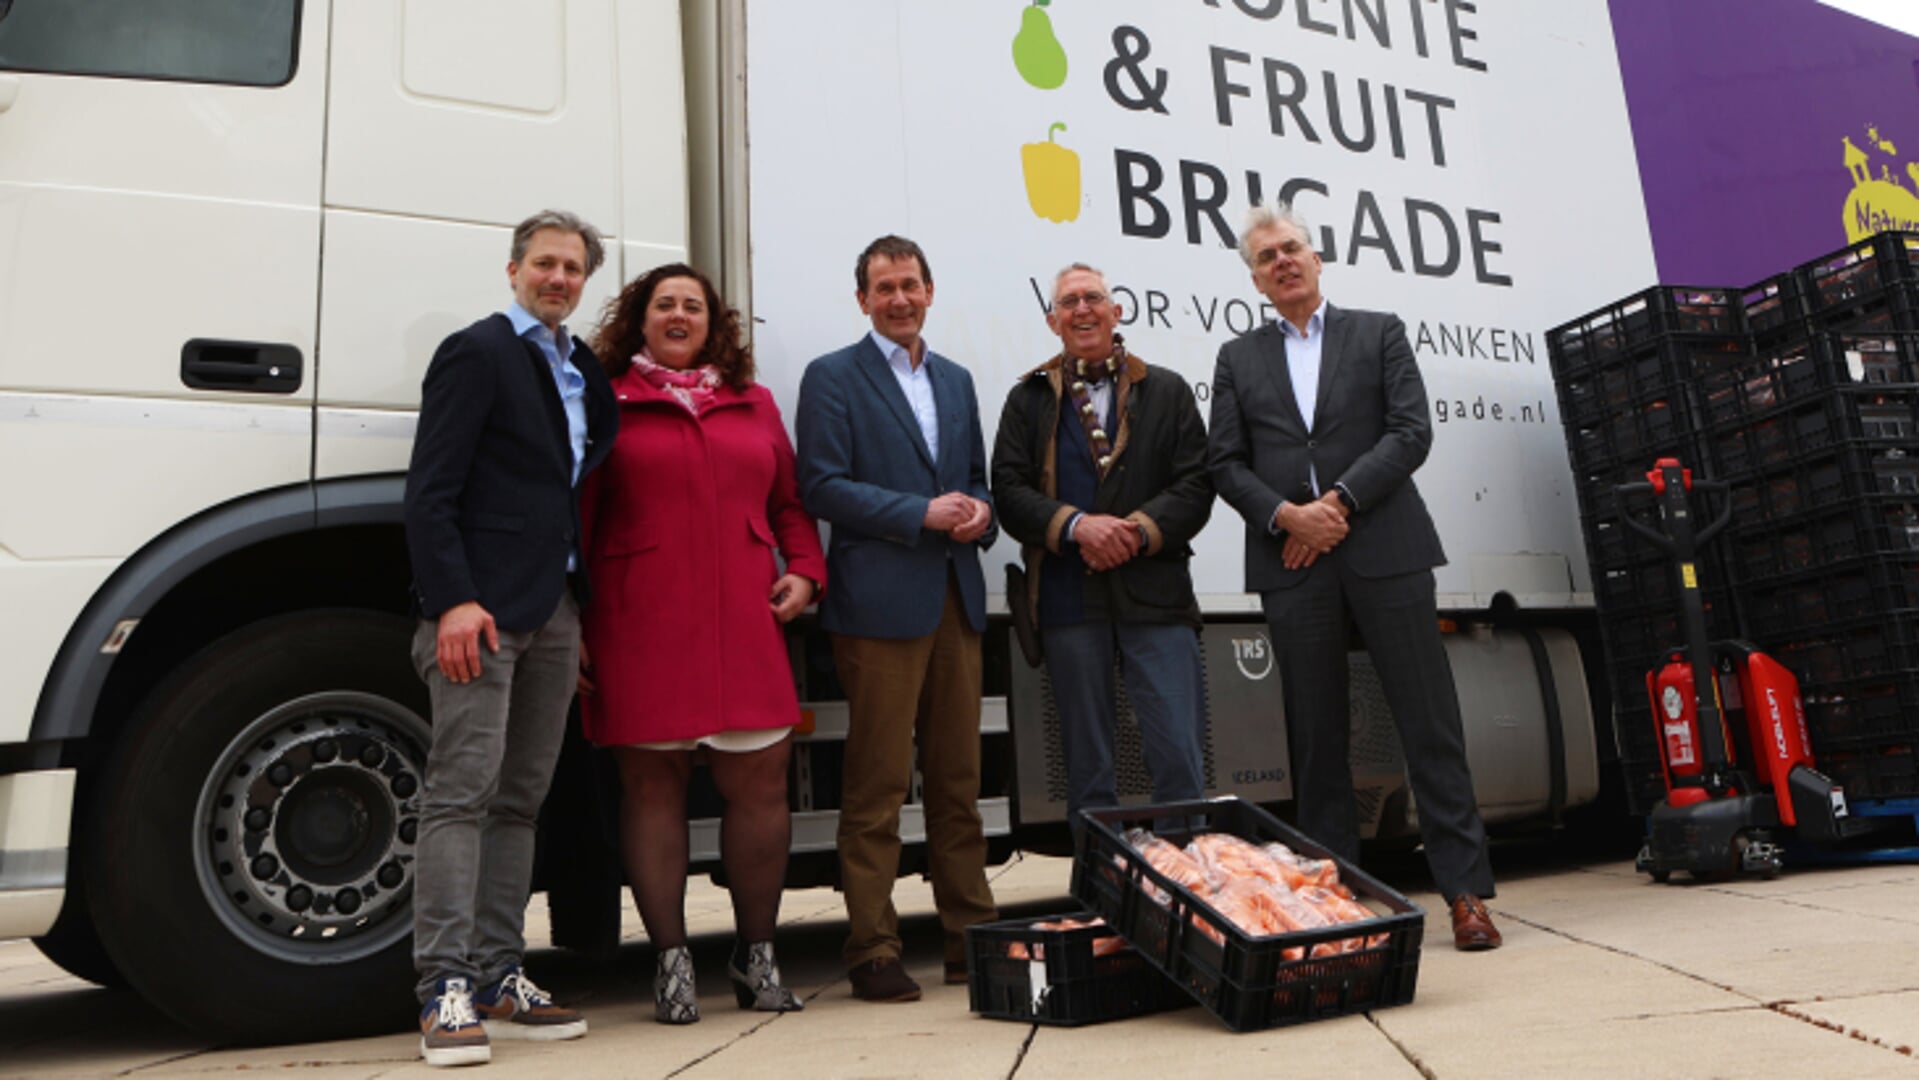 De samenwerkingsovereenkomst wordt bekrachtigd door Rob van Muilekom (gedeputeerde provincie Utrecht), Paul van Berkel (bestuurslid Voedselbanken Nederland) en Gert Mulder (voorzitter Groente & Fruitbrigade), Mary Van Hoek-Hendriks (bestuurslid Groente & Fruitbrigade) en Joost Dekkers (founder Starthubs.